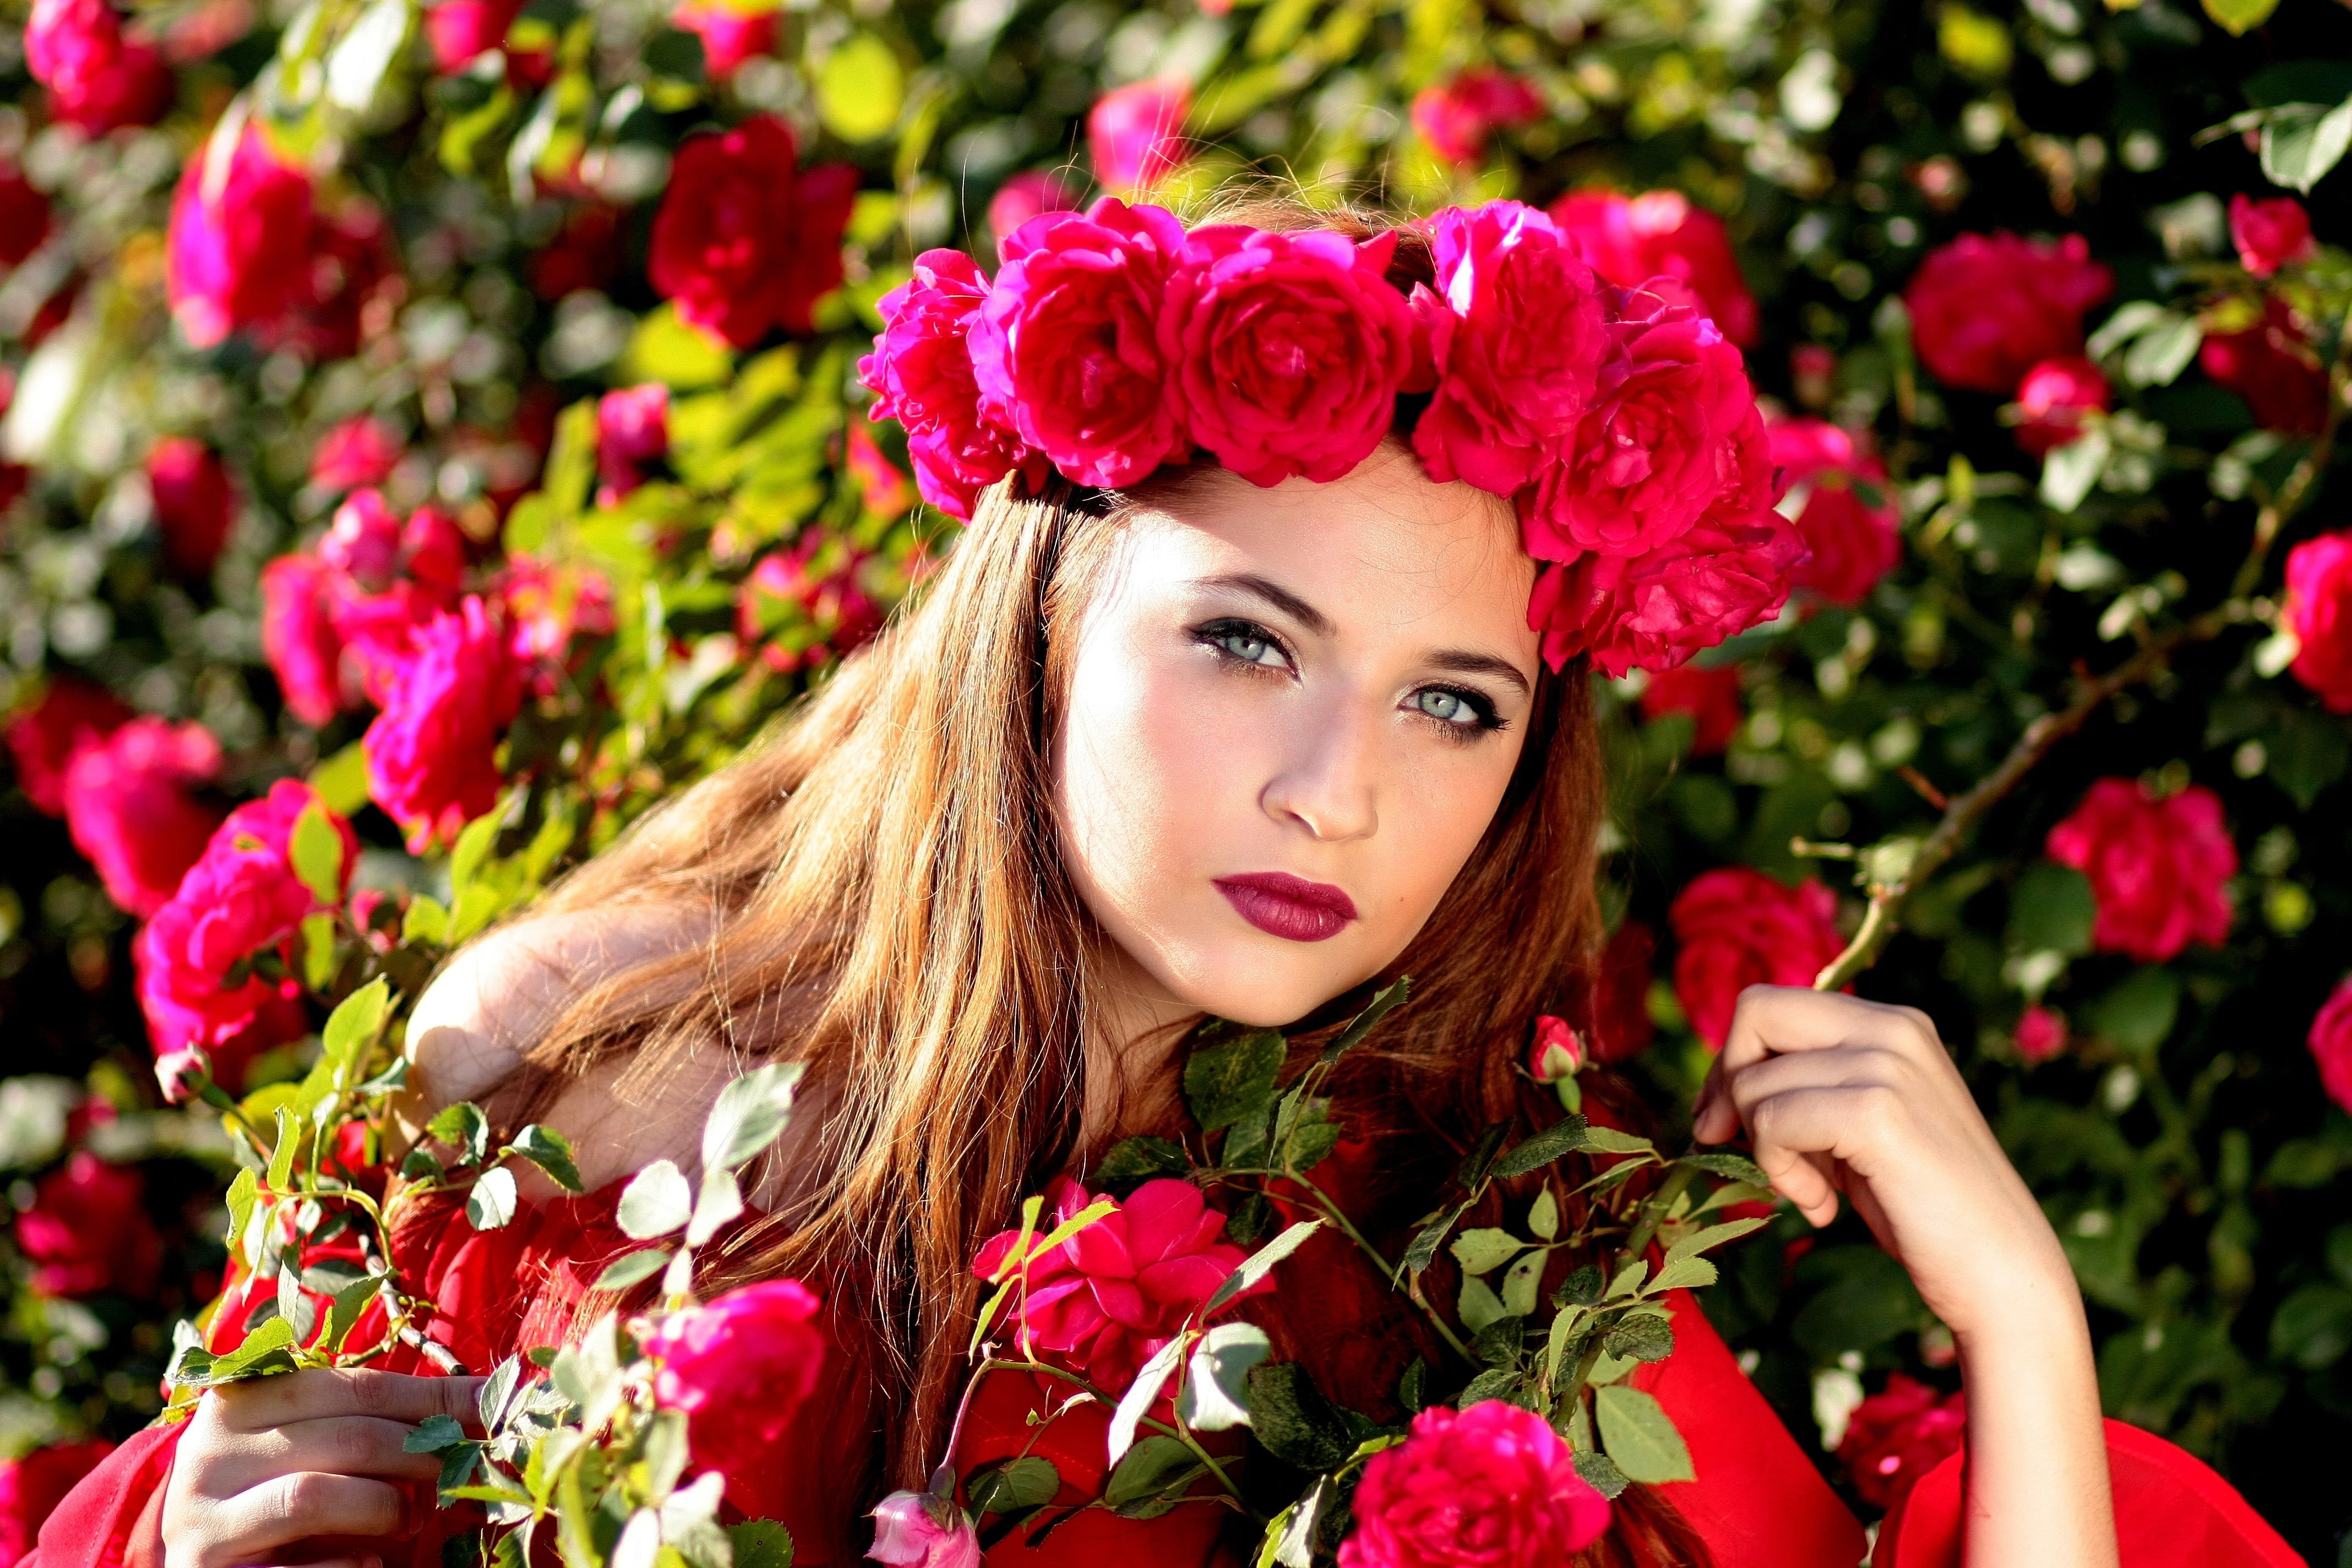 Woman wearing red Rose headband posing in red Rose garden